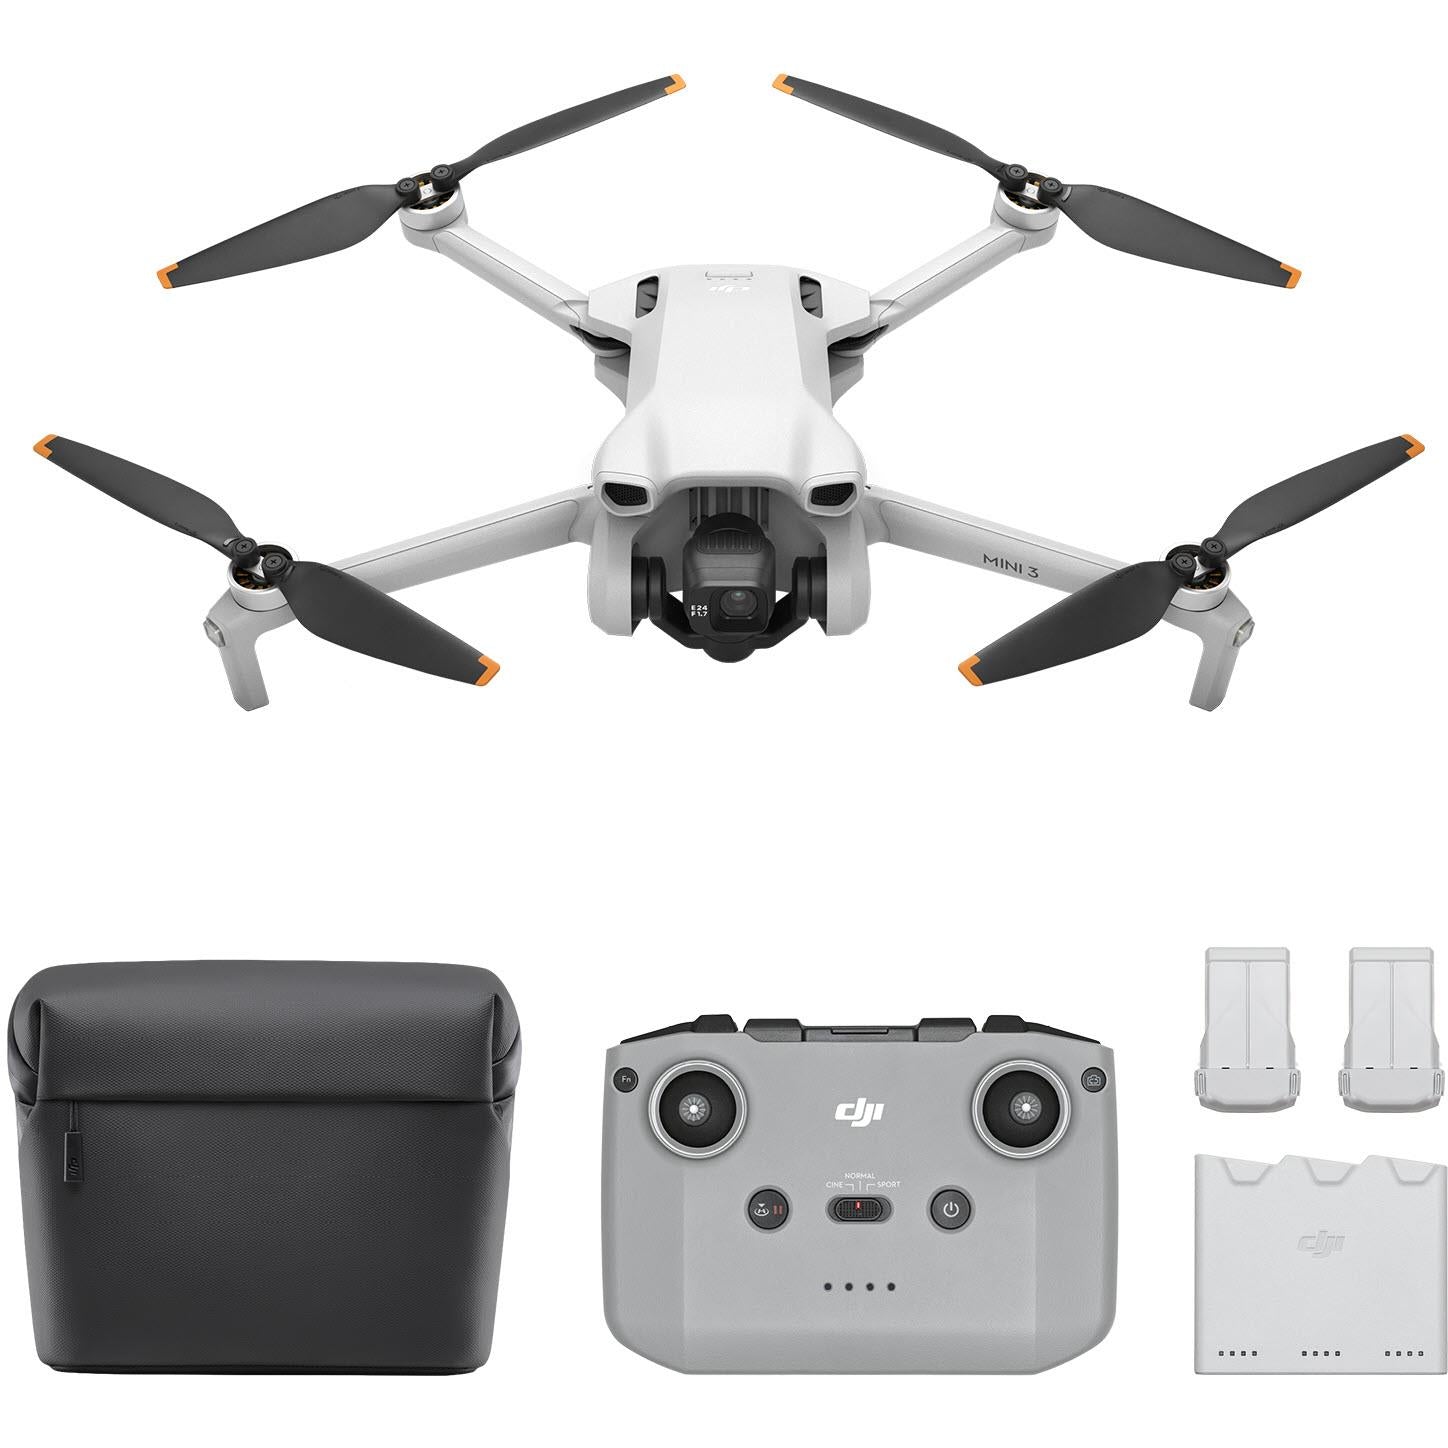 DJI Mini 3 – Beginner's Guide – Droneblog